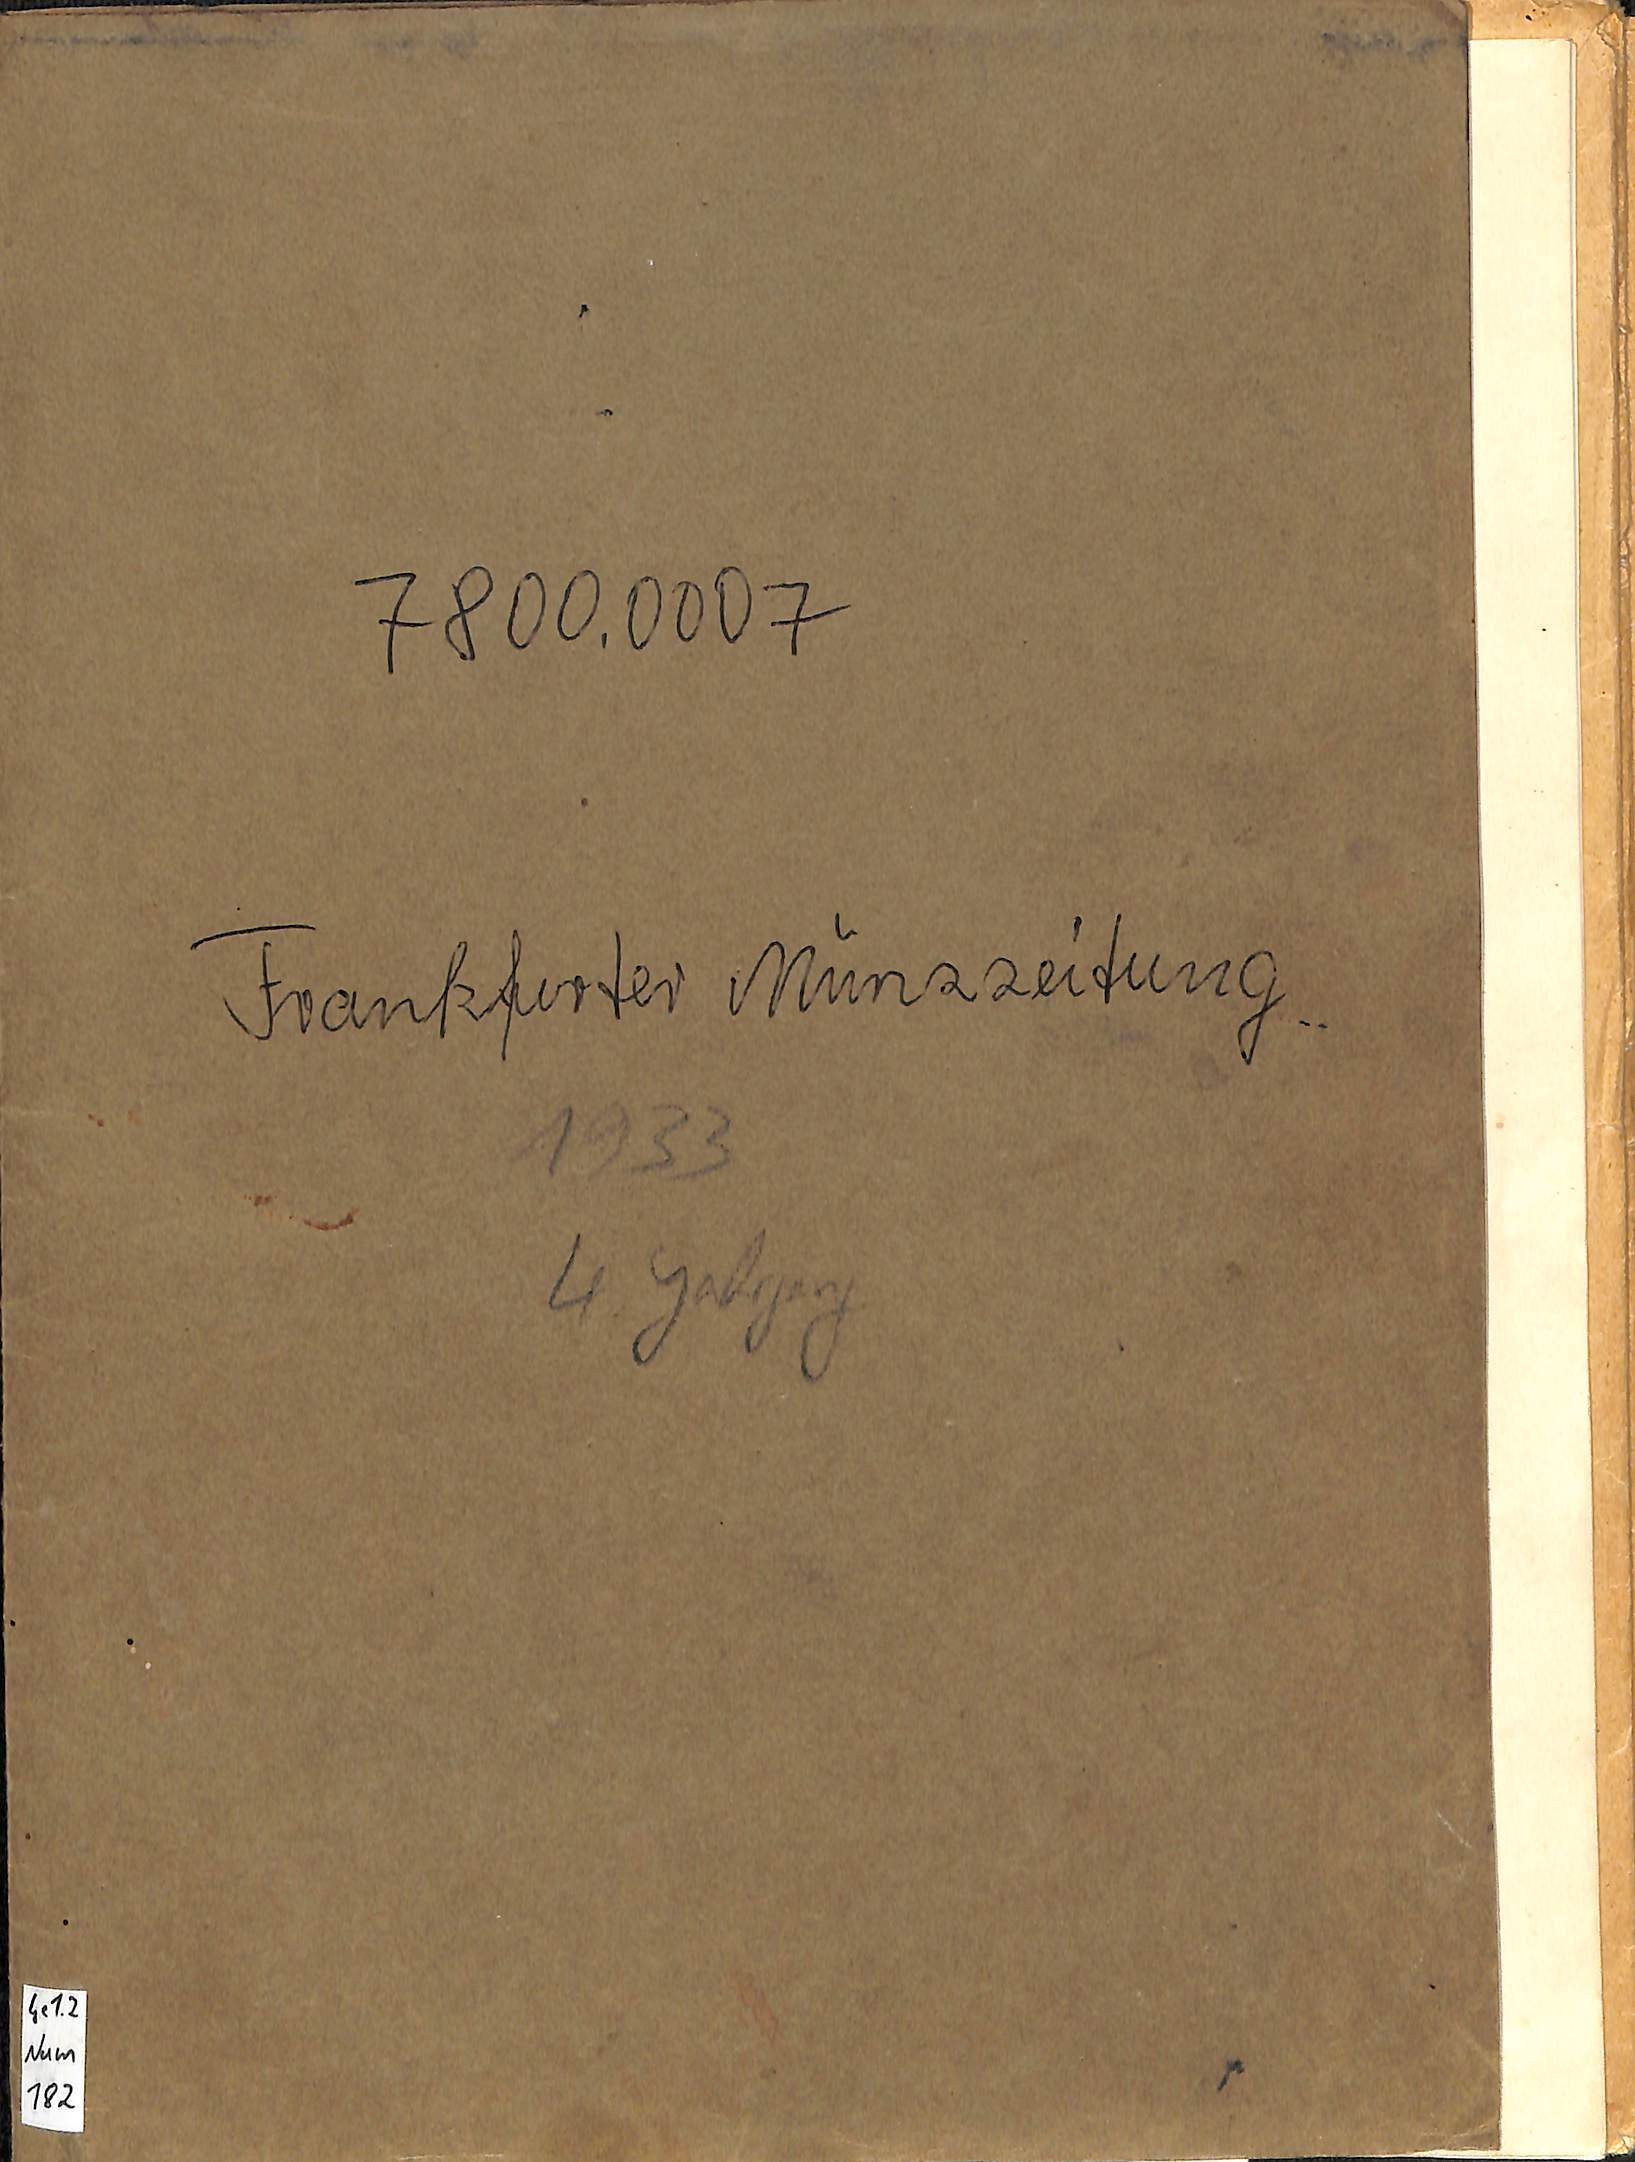 Frankfurter Münzzeitung, Neue Folge, Jahrgang 4, 1933 (Heimatwelten Zwönitz CC BY-NC-SA)